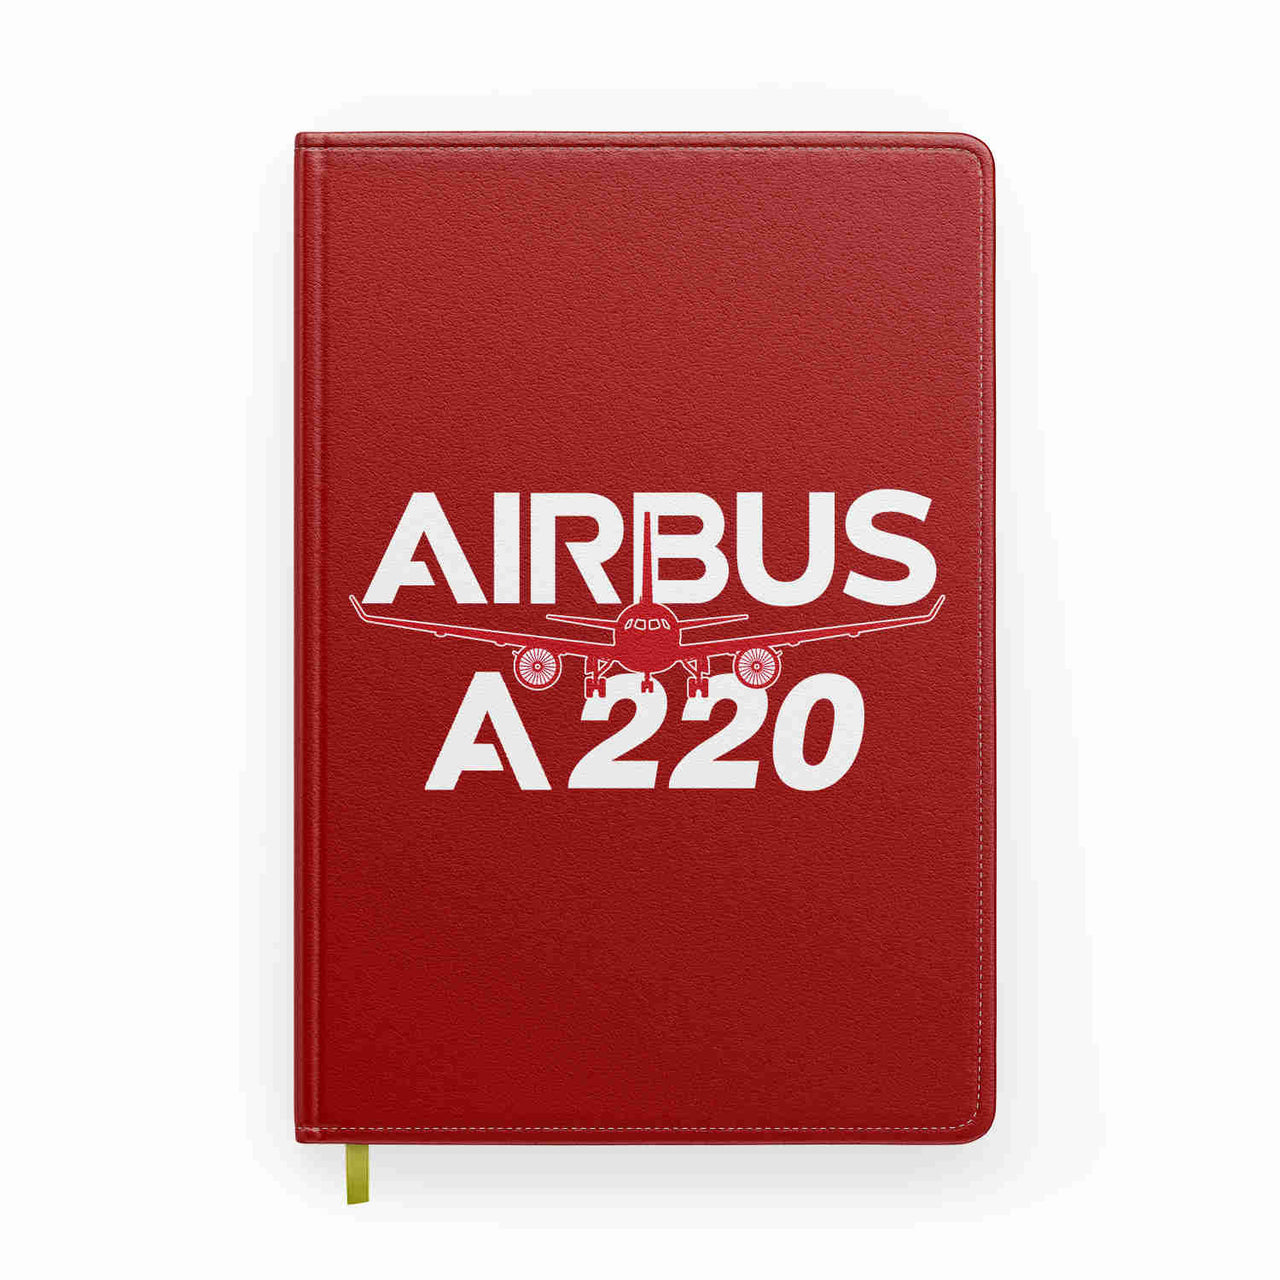 Amazing Airbus A220 Designed Notebooks